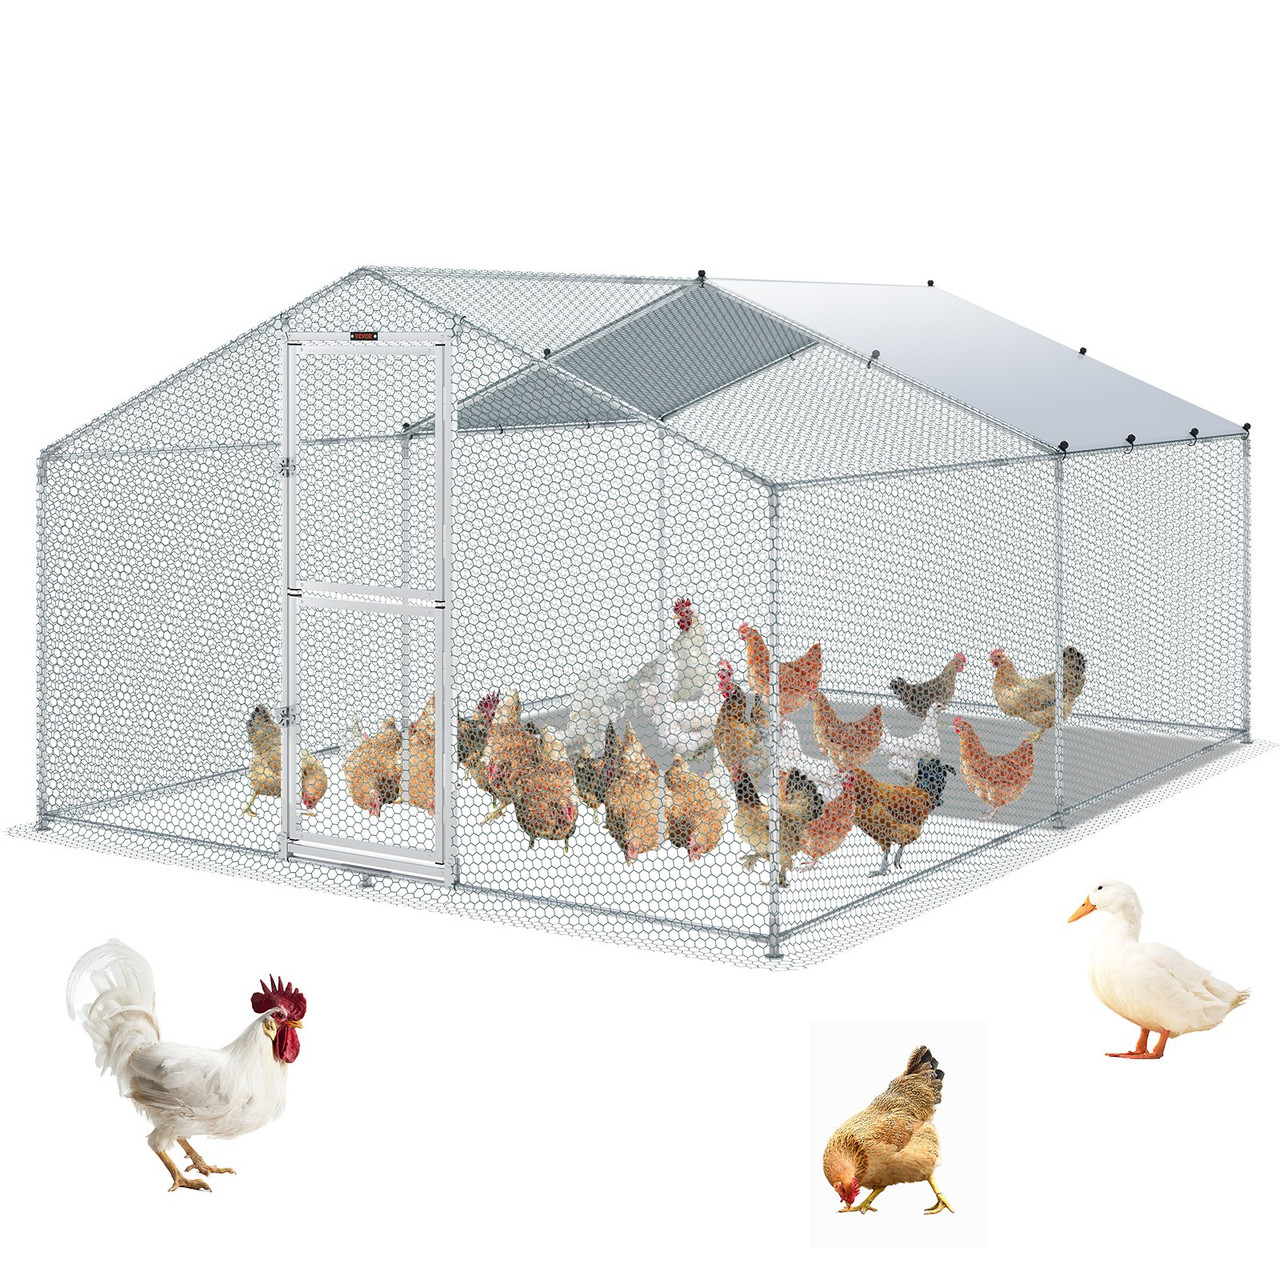 Metal Chicken Coop, 13.1 x 9.8 x 6.6 ft Large Chicken Run, Peaked